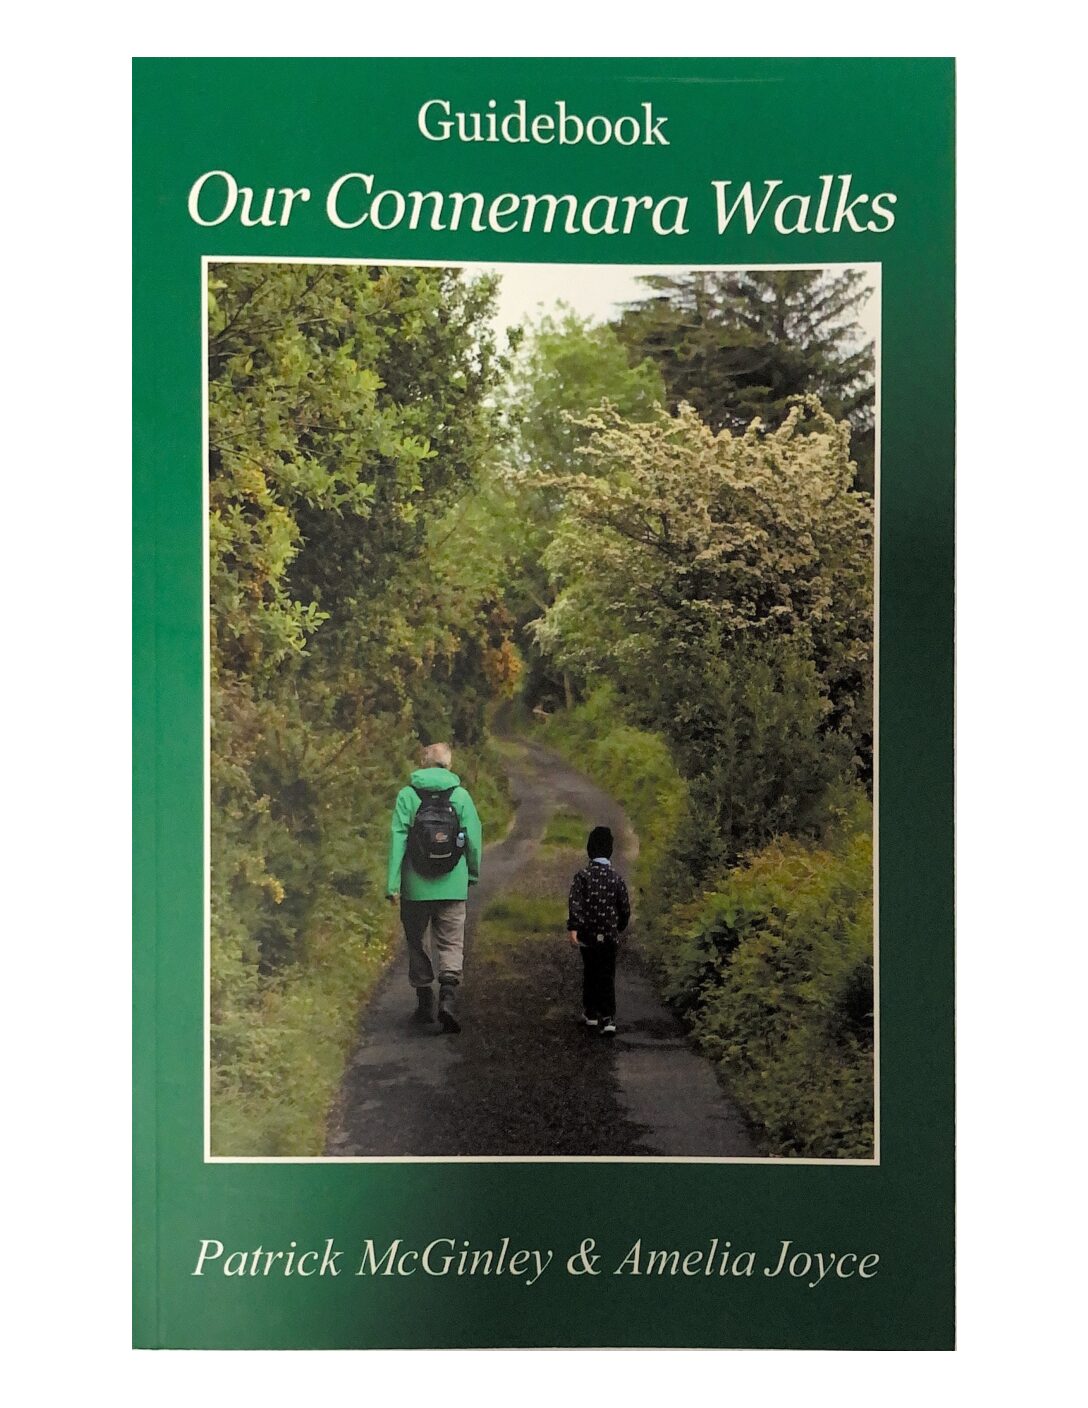 Our Connemara Walks by Patrick McGinley & Amelia Joyce